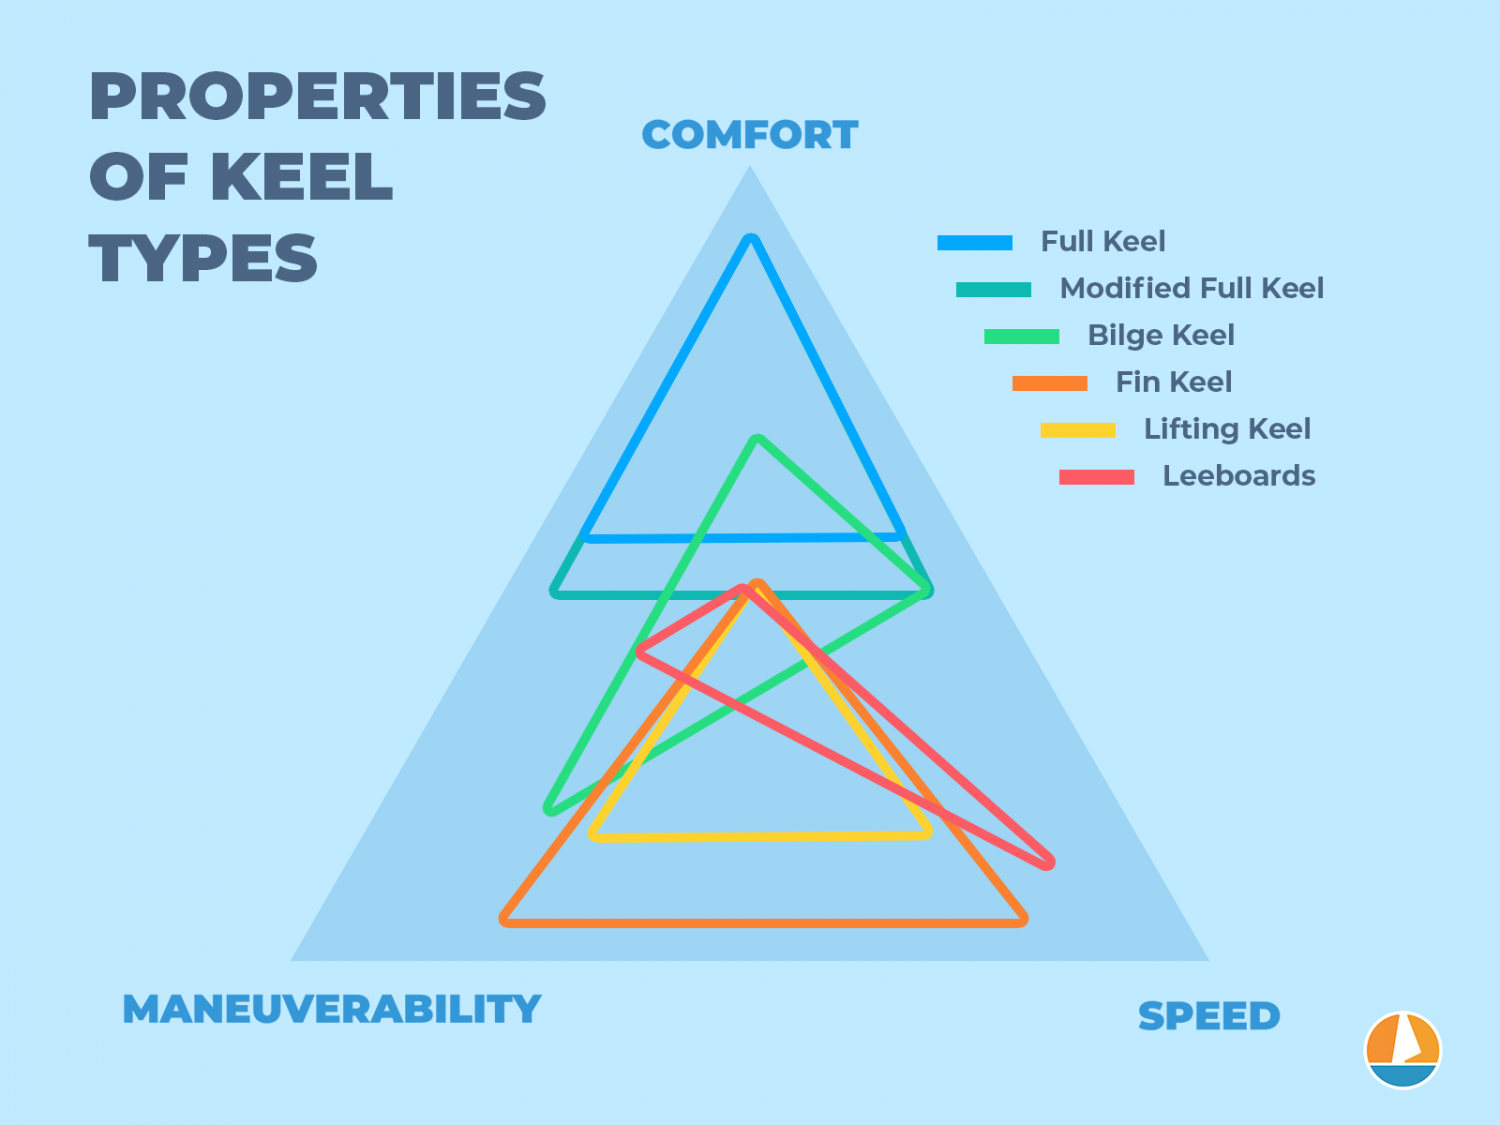 sailboat keel types properties diagram - Sailboat Keel Types: Illustrated Guide (Bilge, Fin, Full) | Coast Swimming